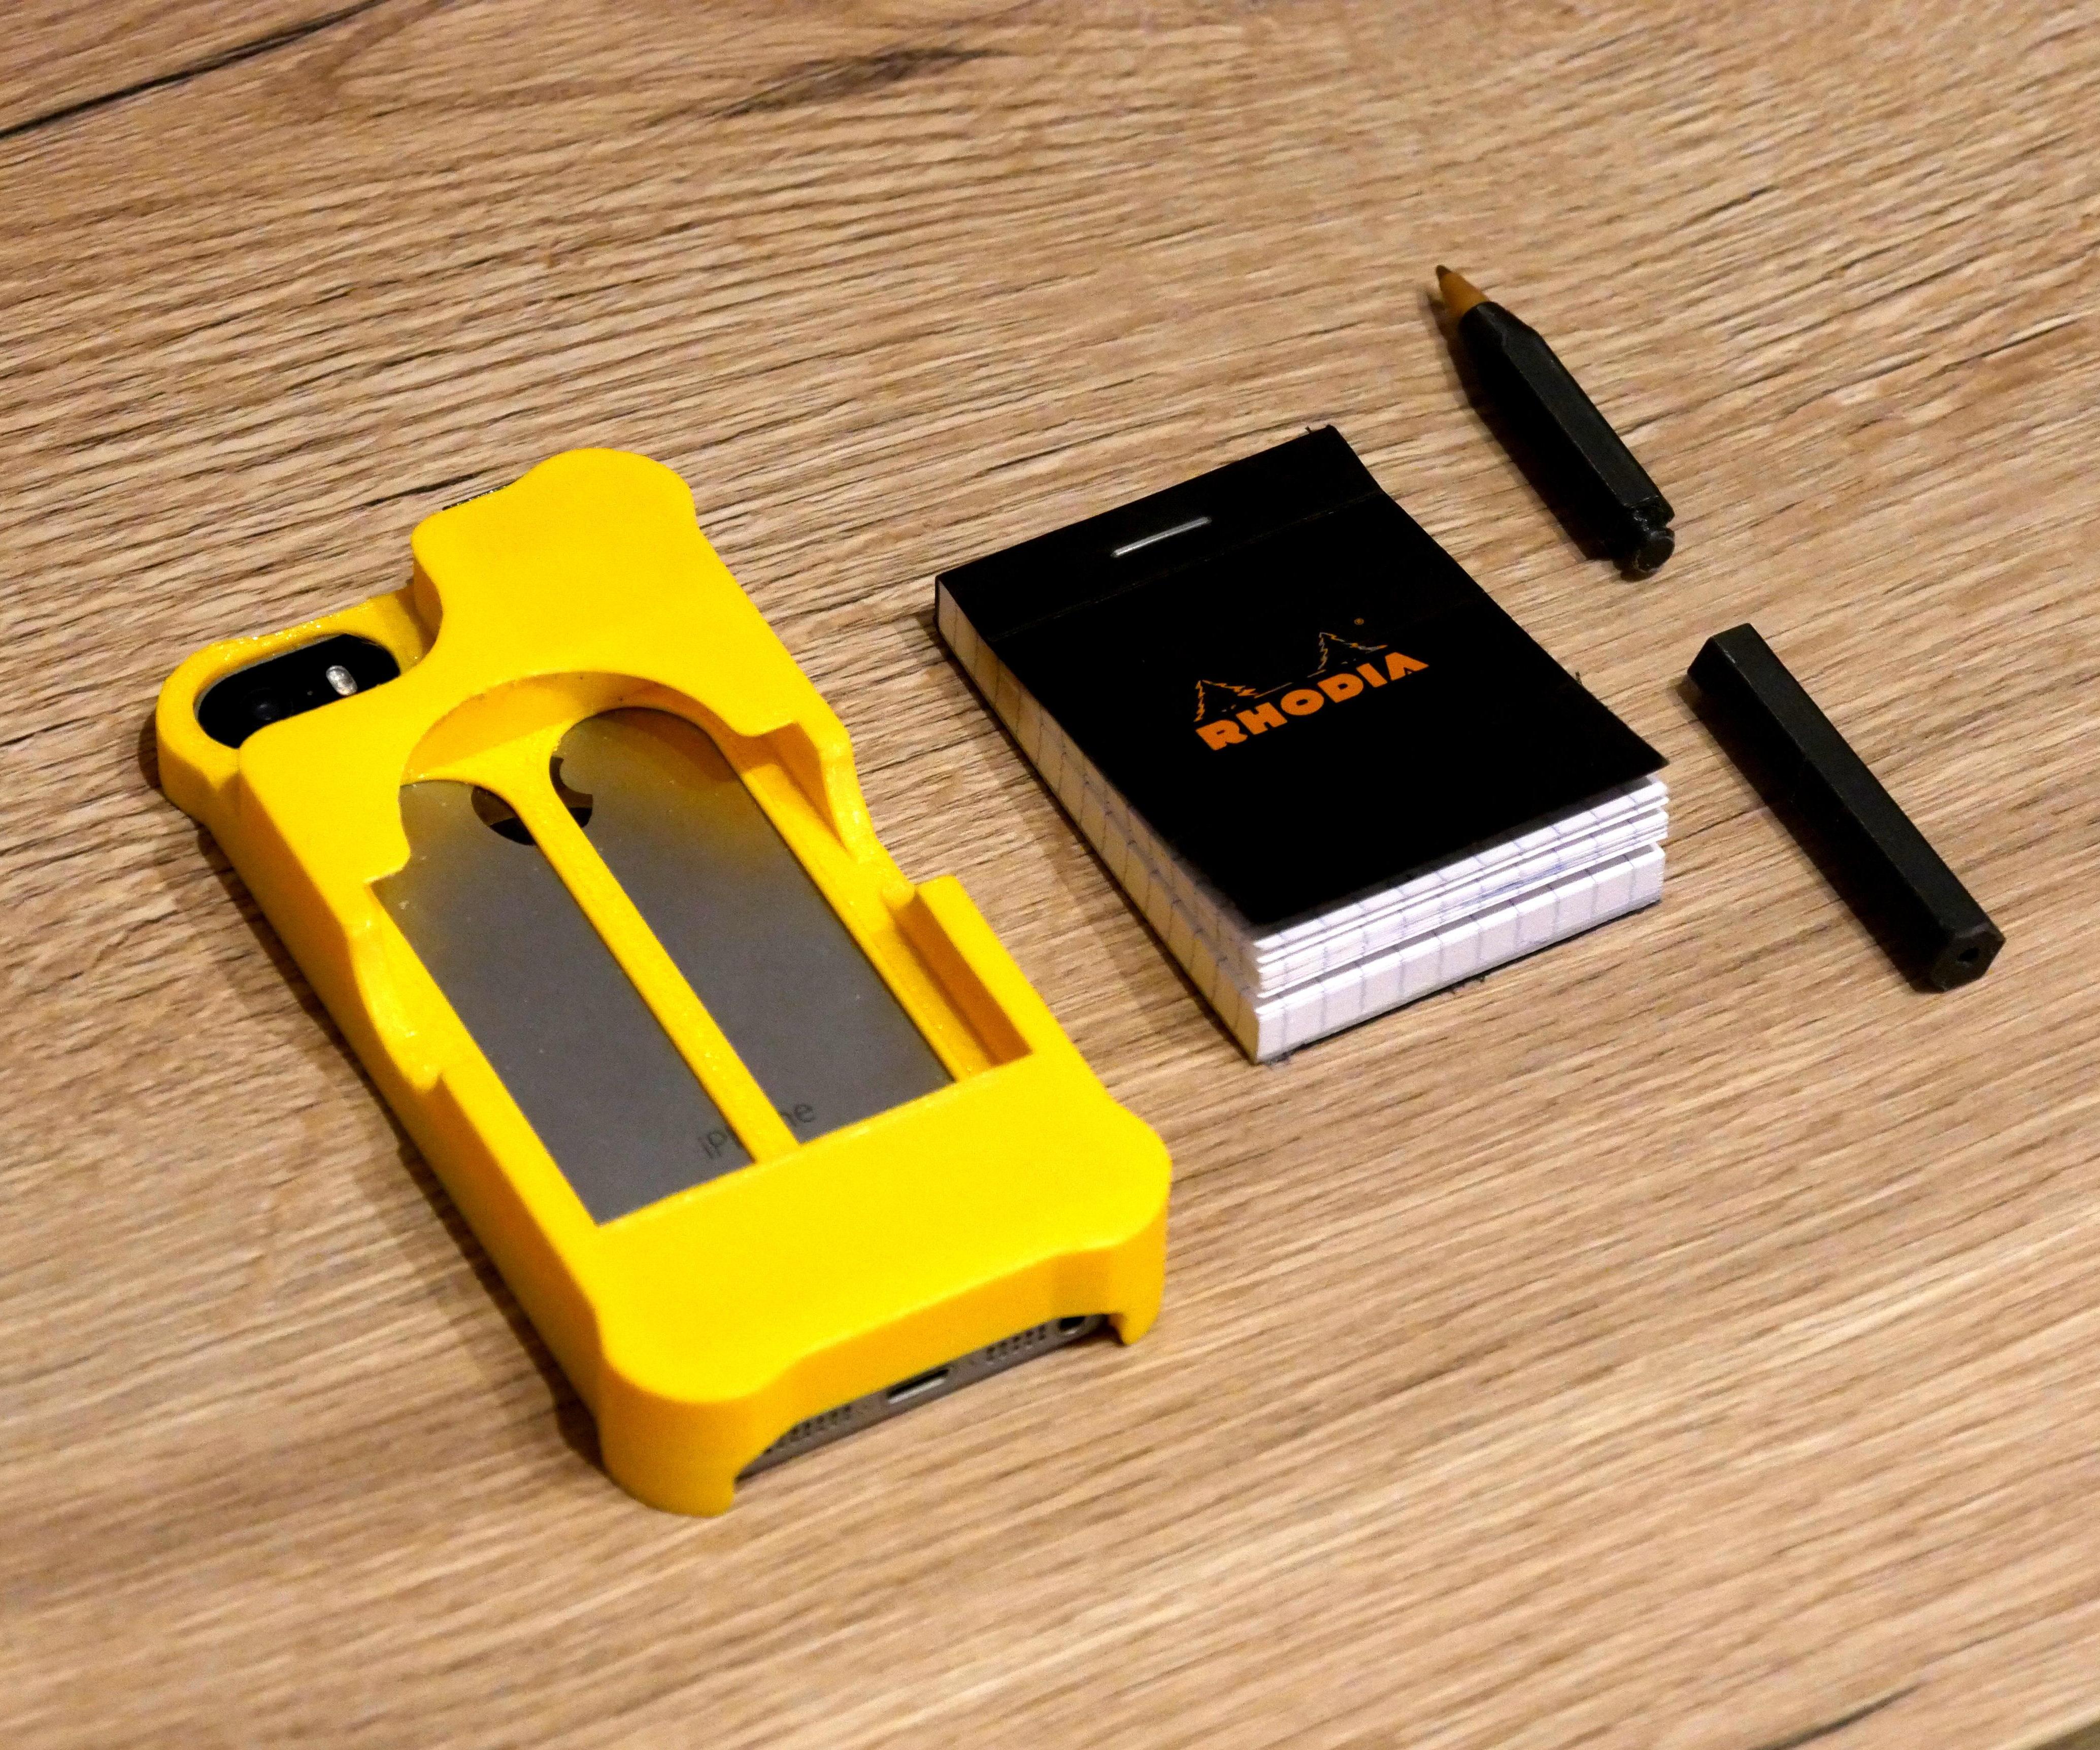 Smartphone case with notebook, pen and secret pocket